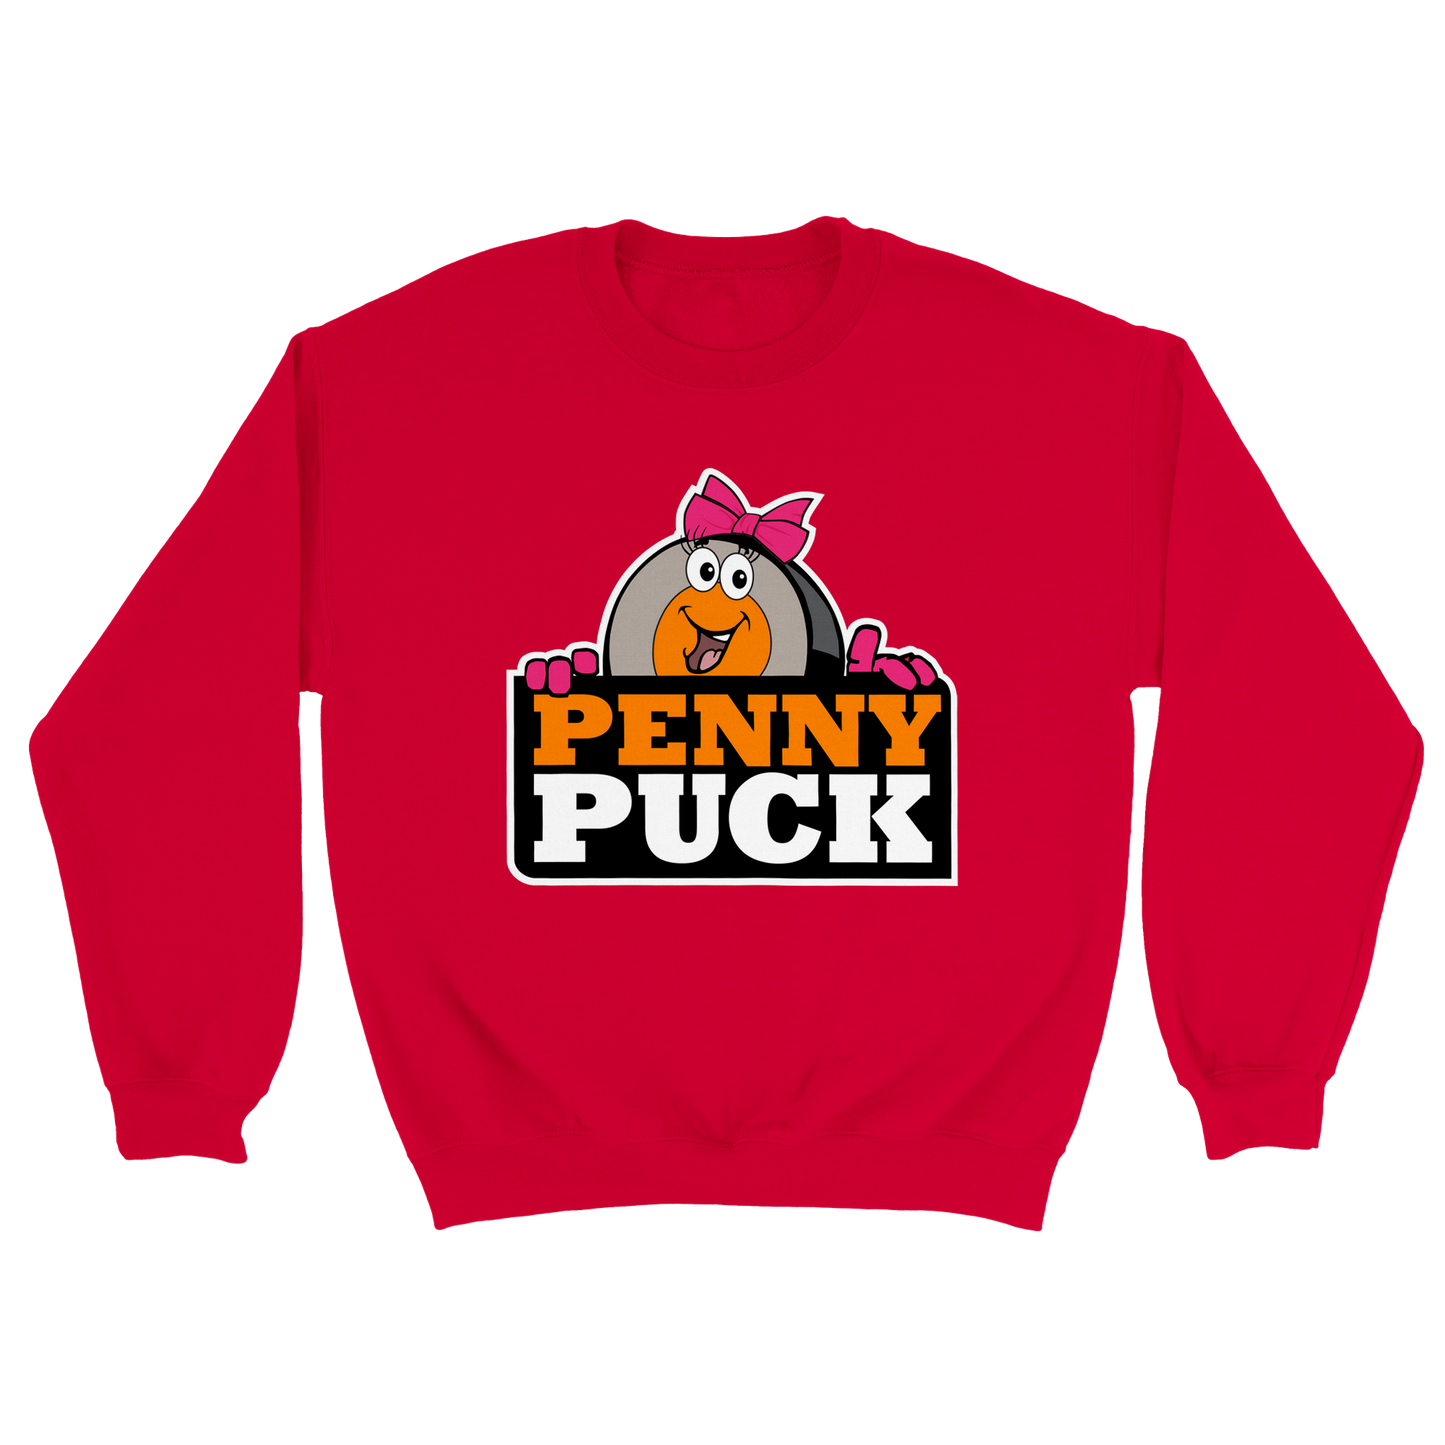 Penny Puck Peek Mens Classic Crewneck Sweatshirt